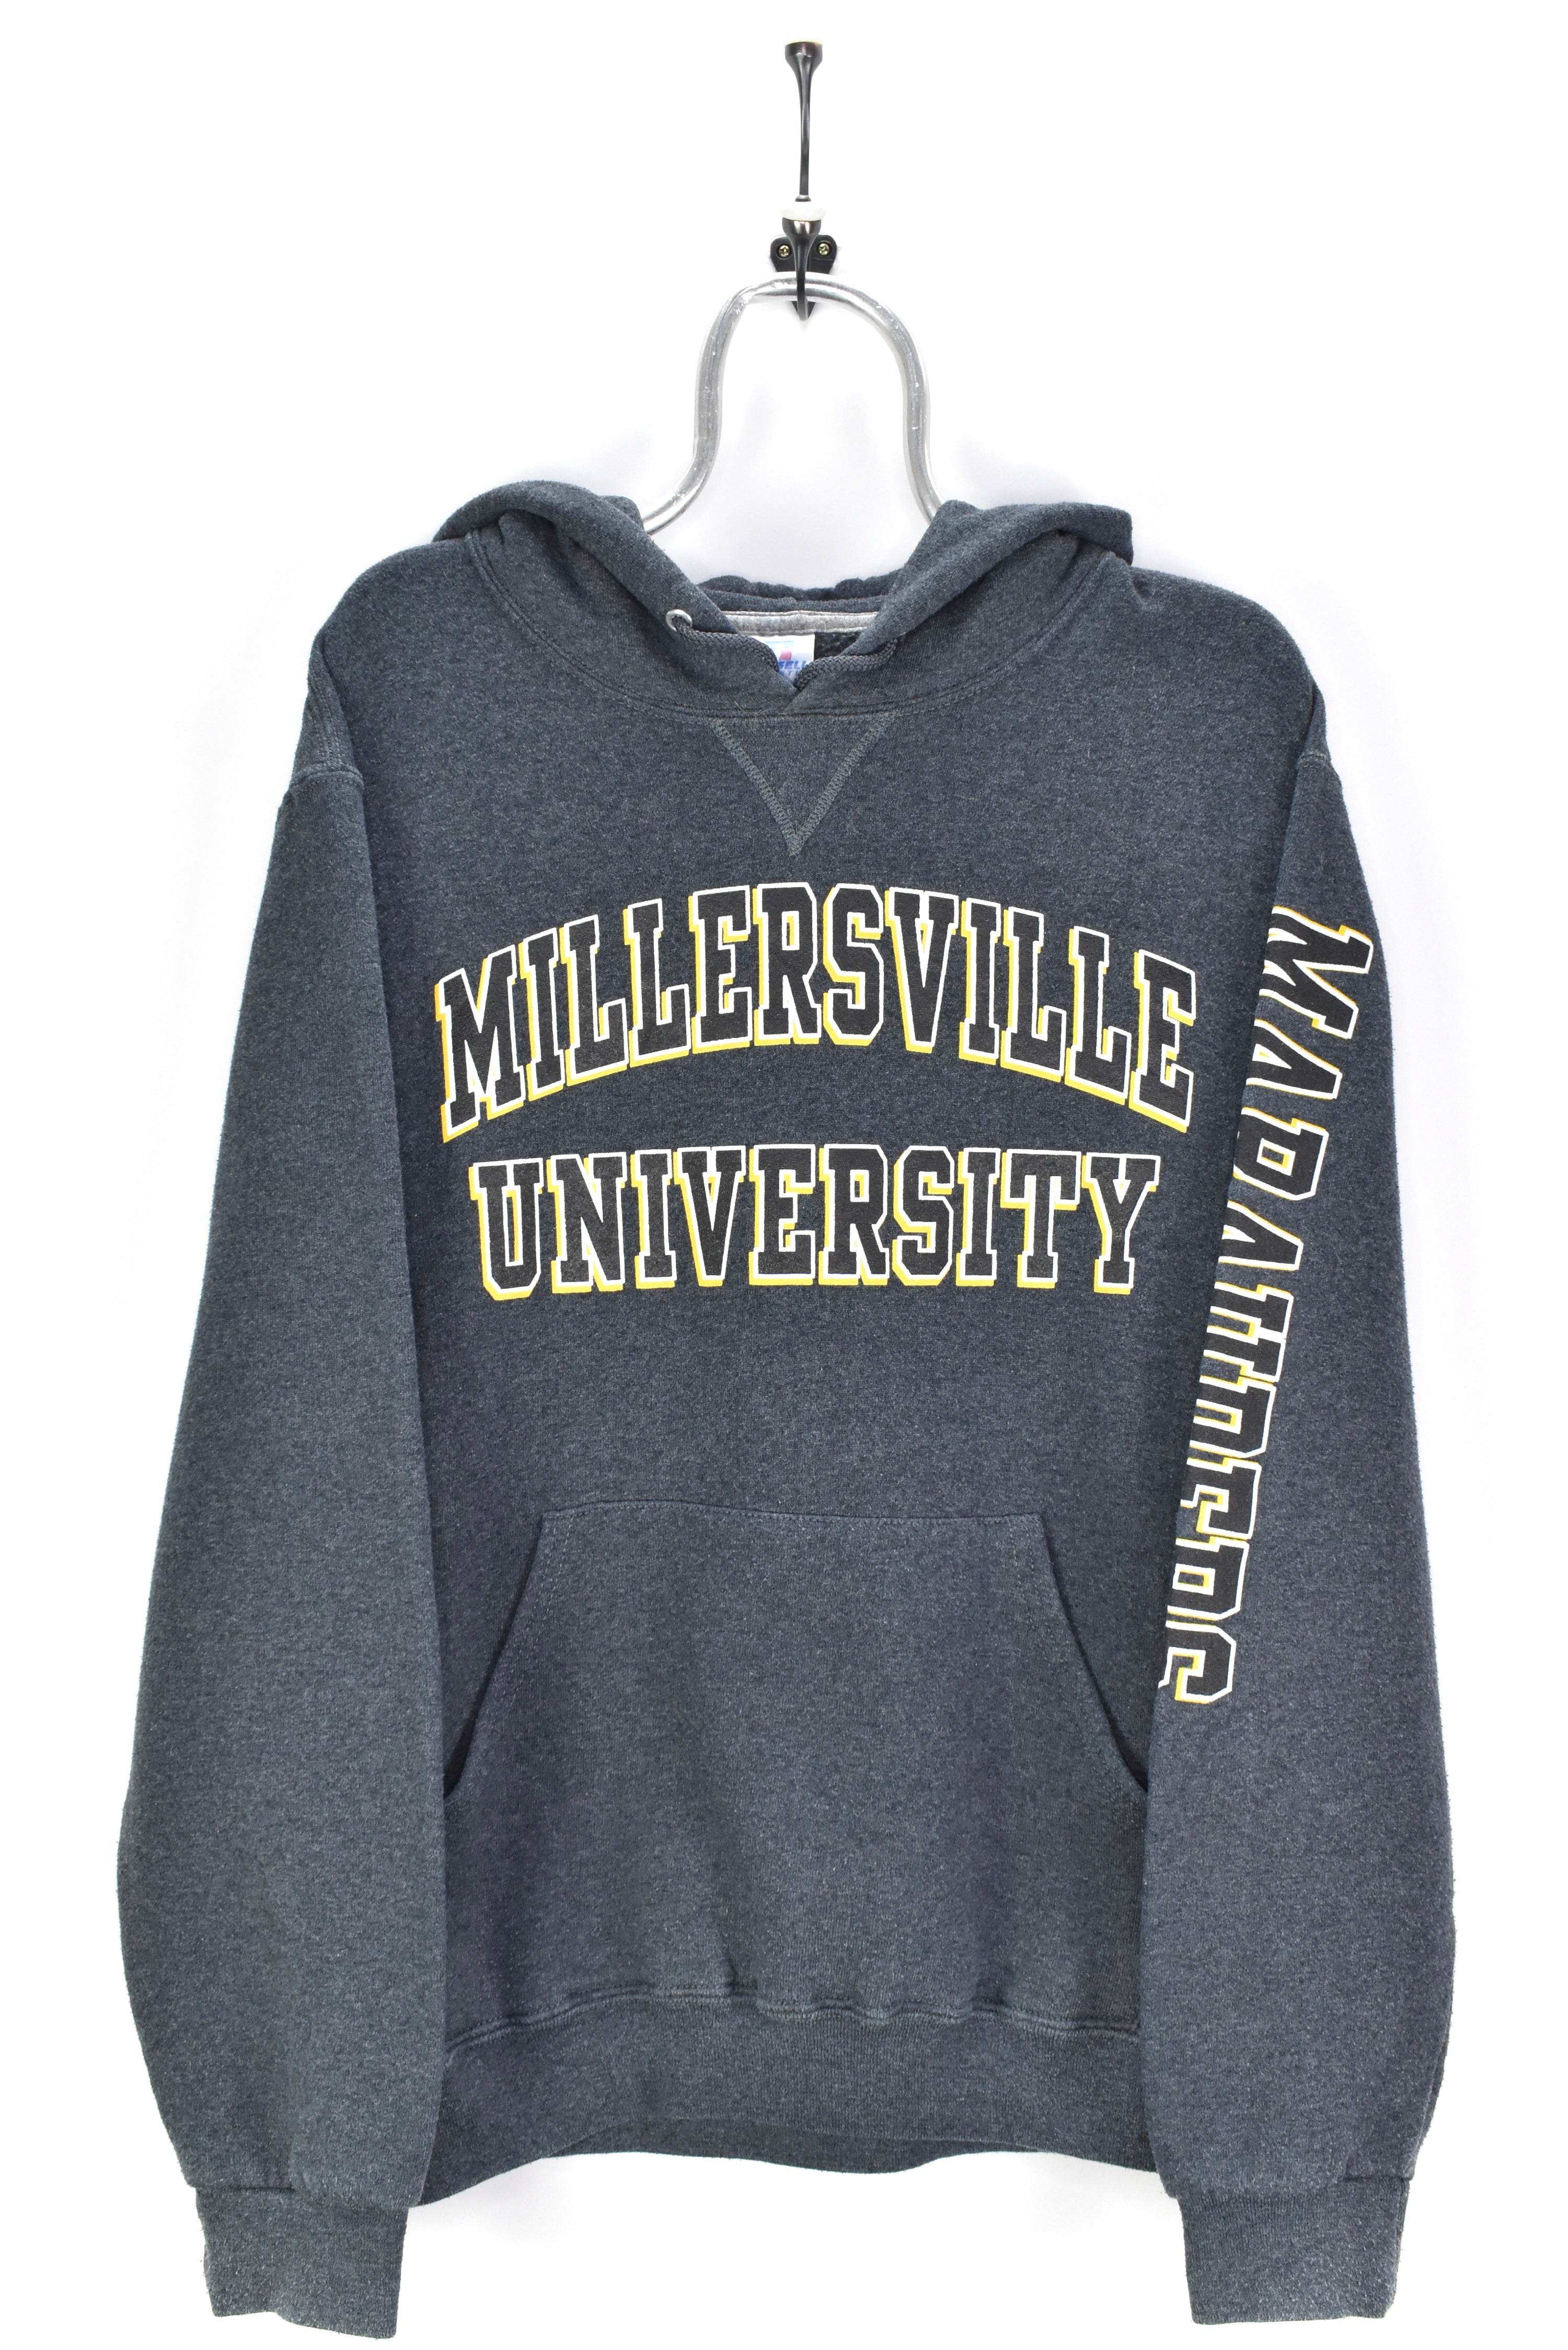 White Sports Tees - Millersville University Store